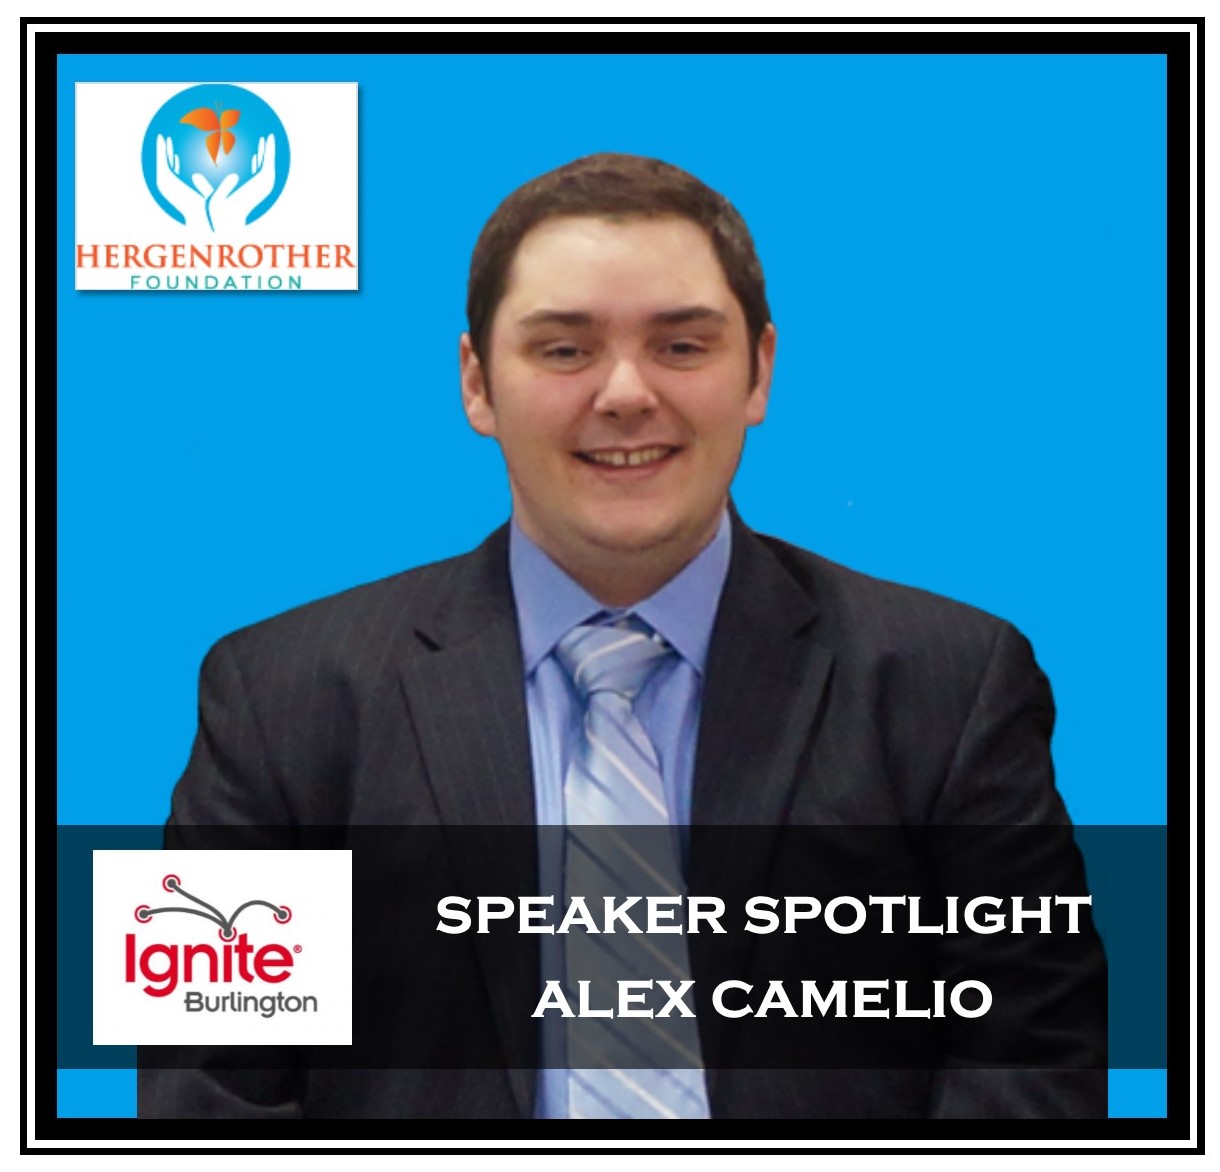 a-camelio-speaker-spotlight